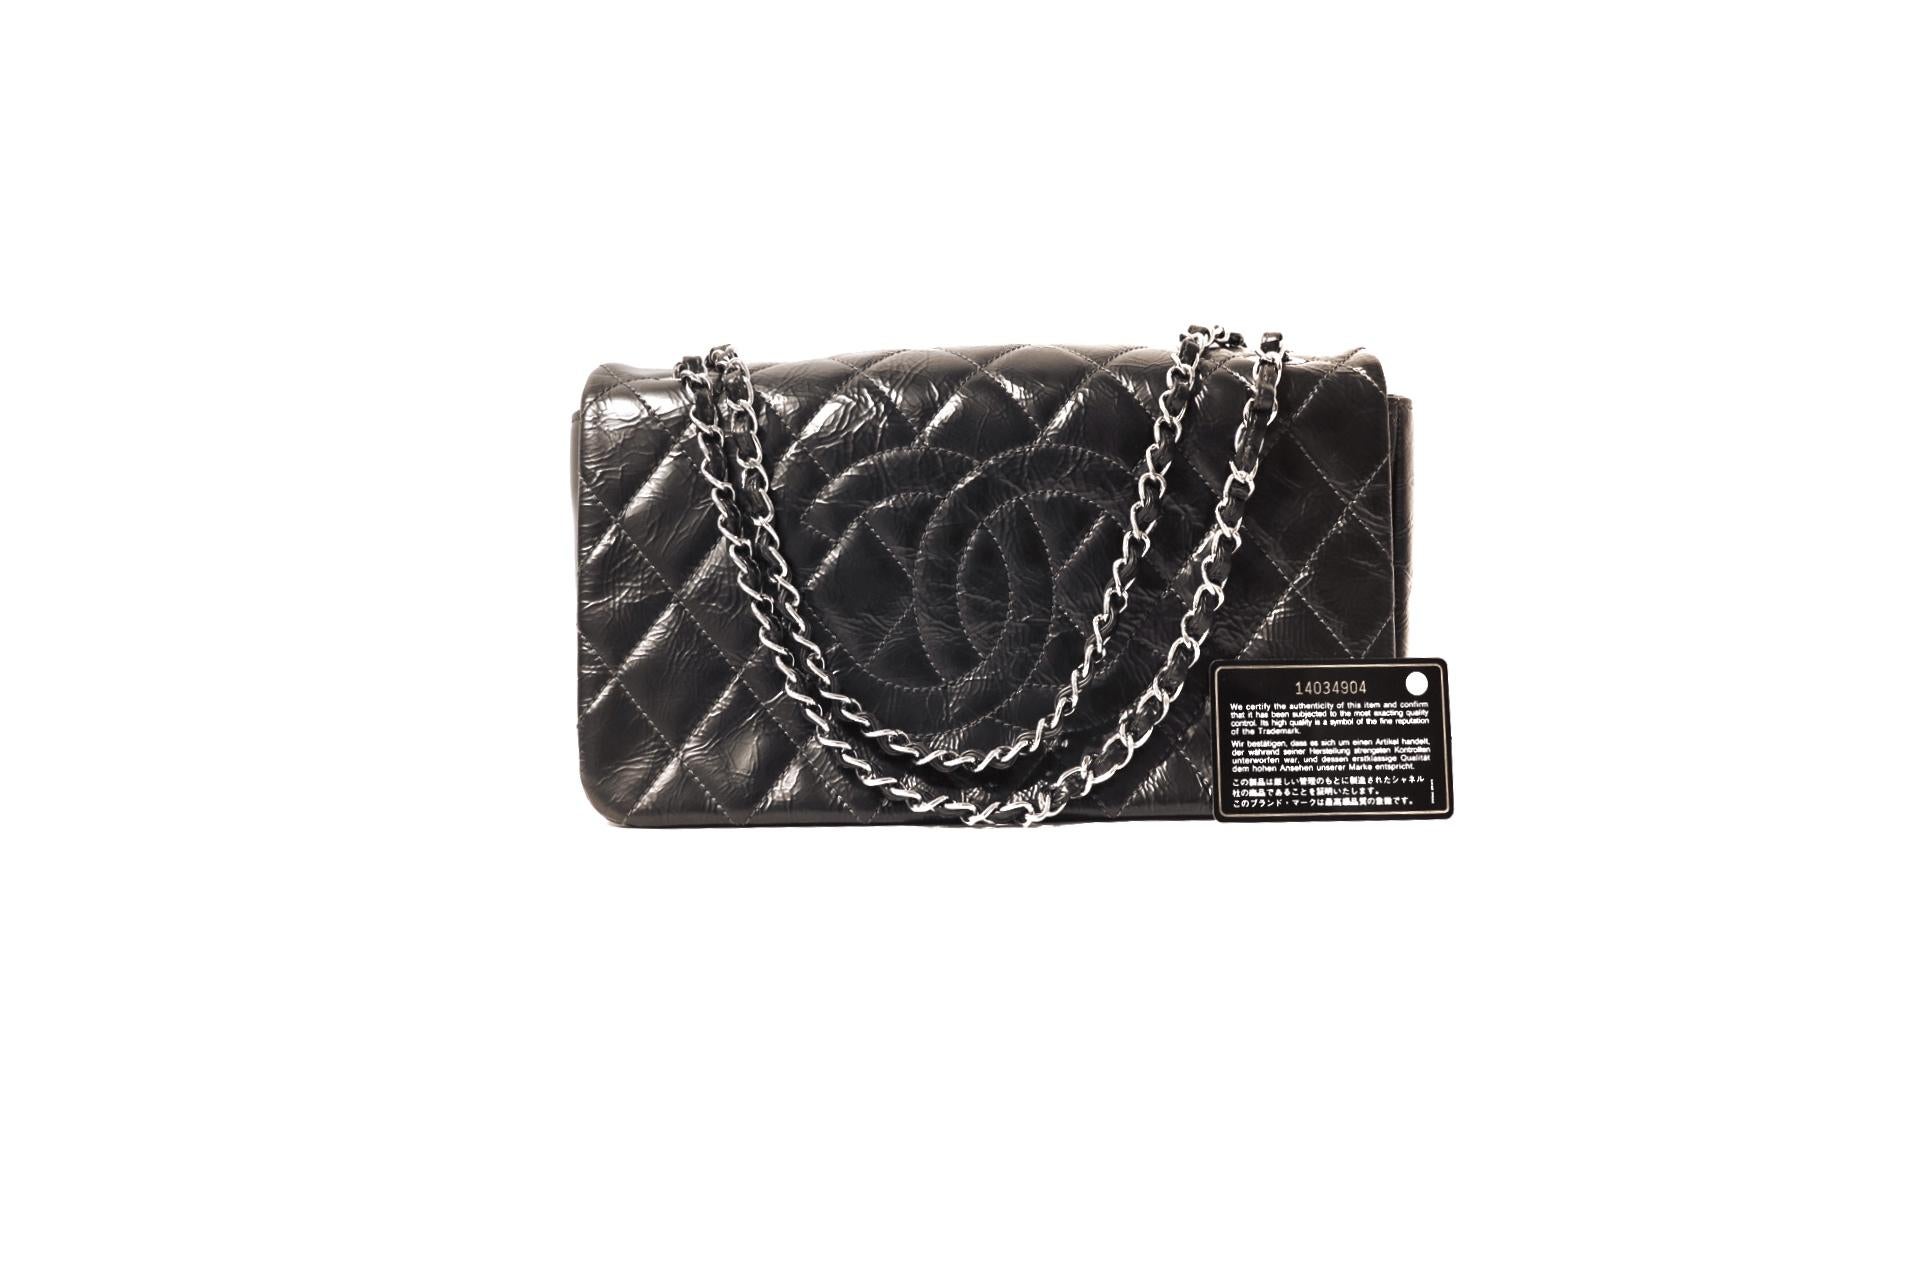 Chanel Black Leather Flap Bag 3